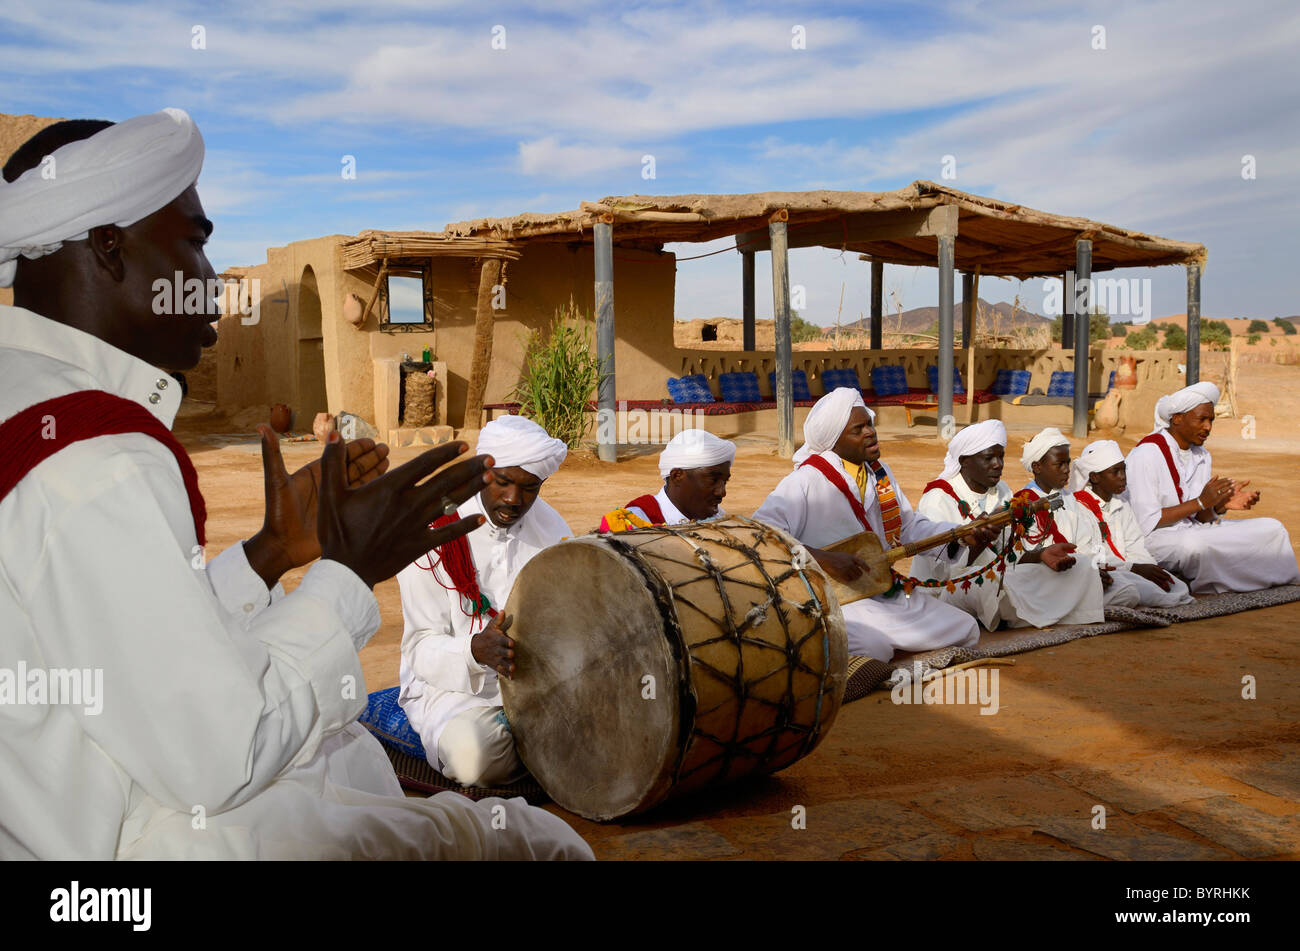 Tauben du Sable Gnawa Musikgruppe in weißen Turbanen und Djellabas spielen Trommel Hand Clap laute Gimbri in Khemliya Dorf Marokko Nordafrika Stockfoto